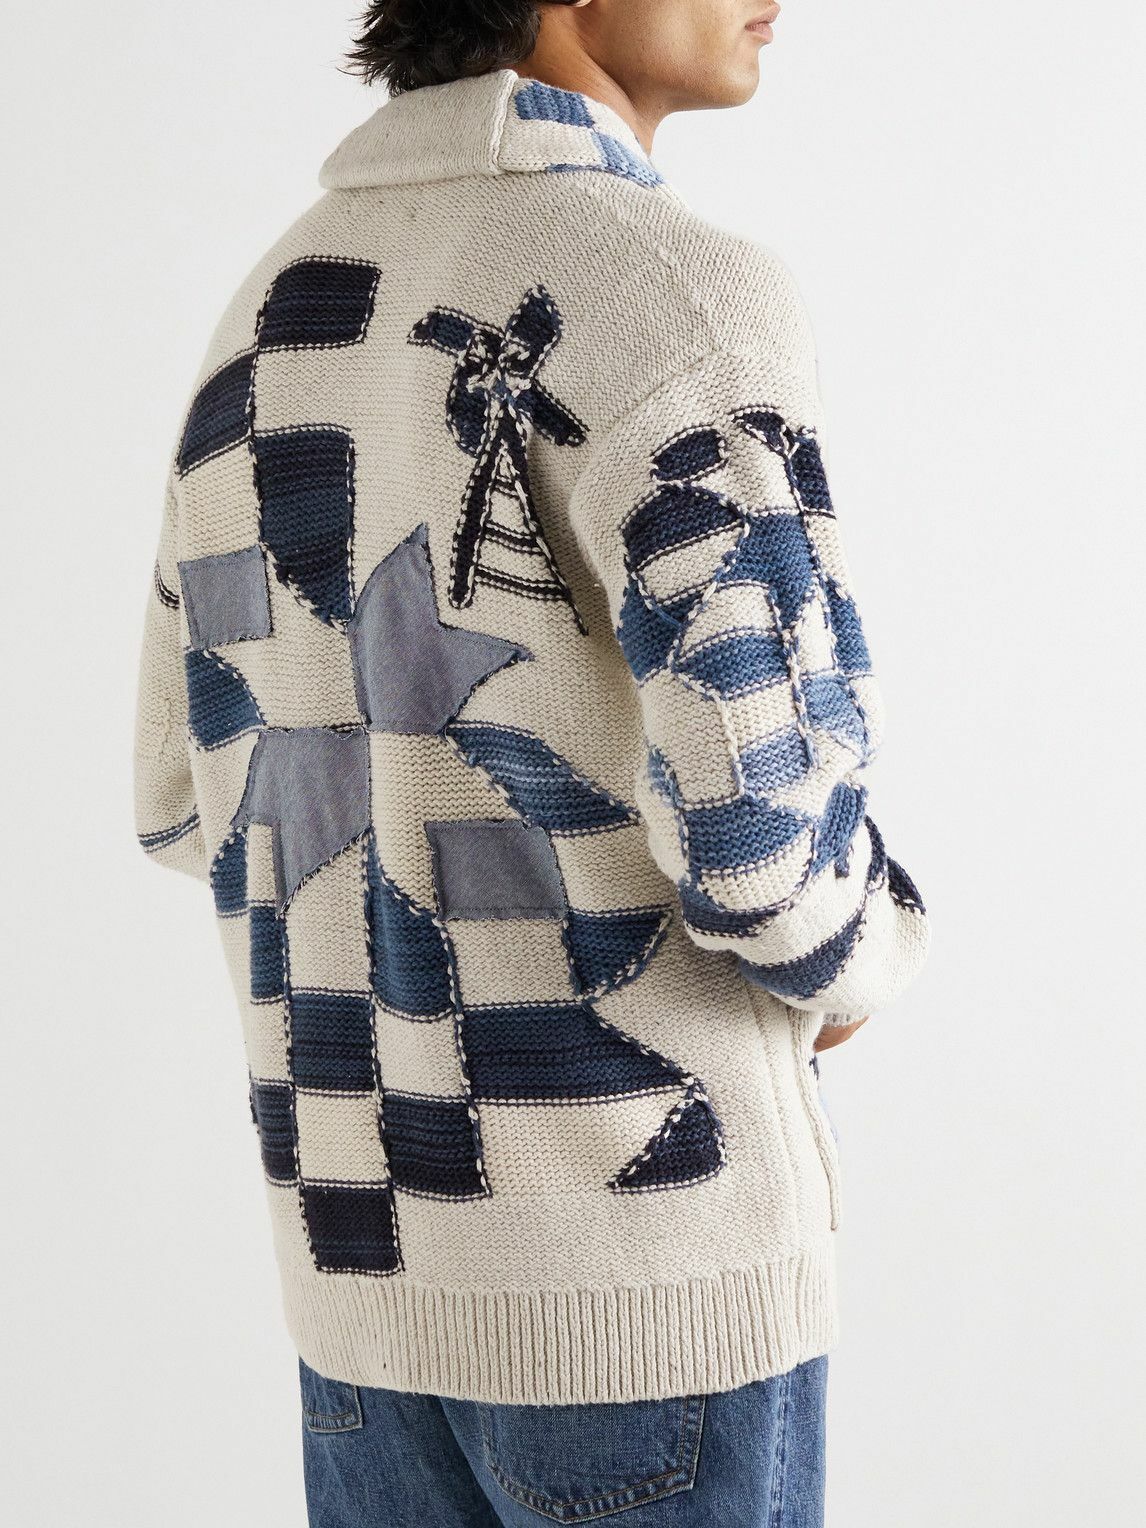 Polo Ralph Lauren - Jacquard-Knit Recycled Cotton-Blend Cardigan - Blue